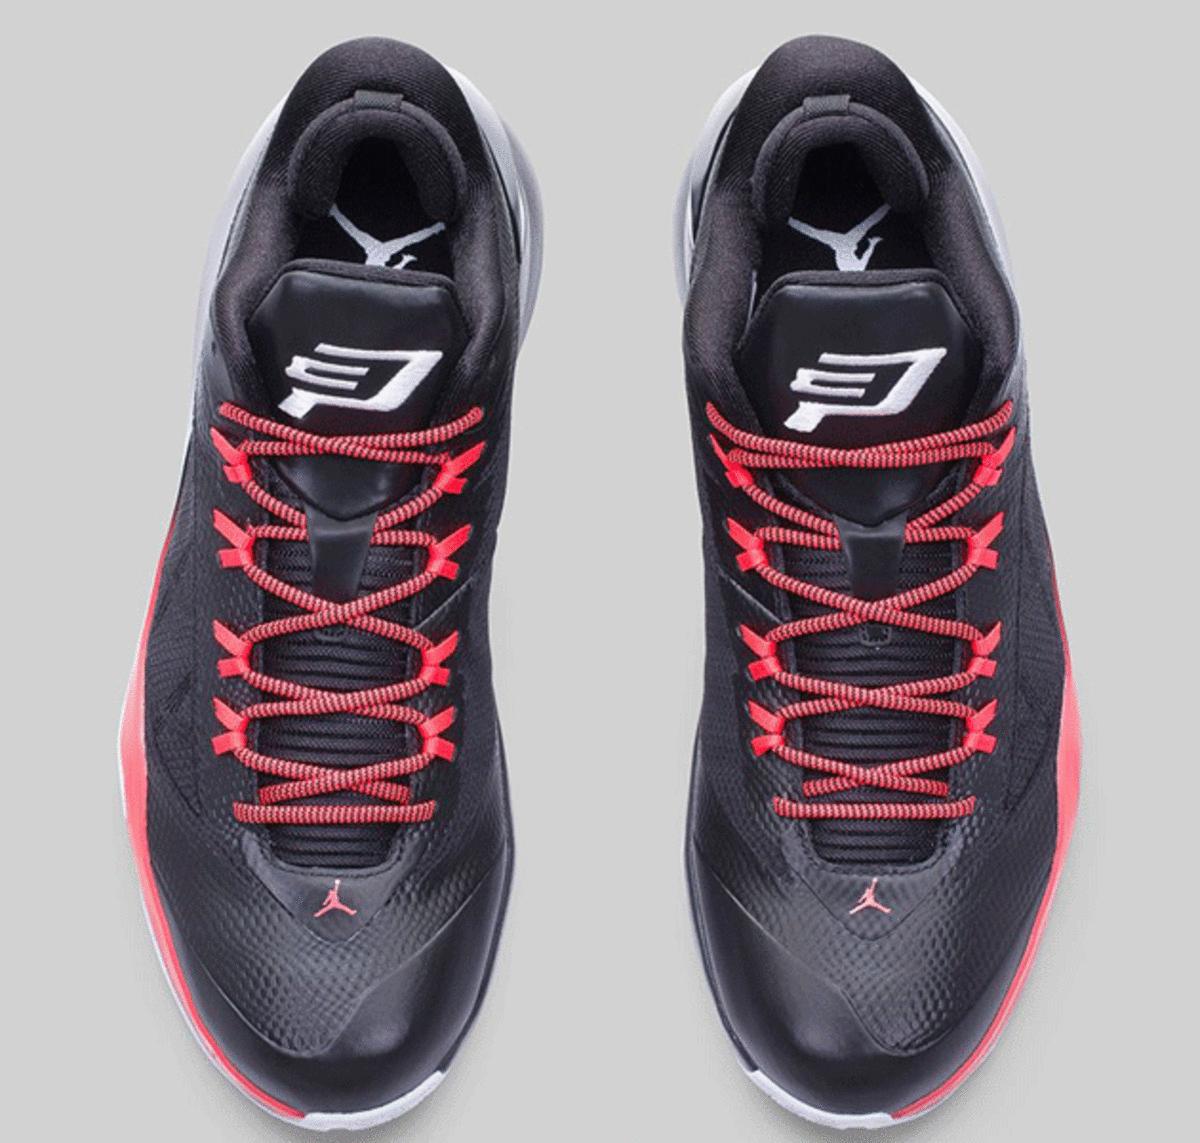 Jordan Brand Launches Chris Paul's Latest Signature Shoe, the 'CP3